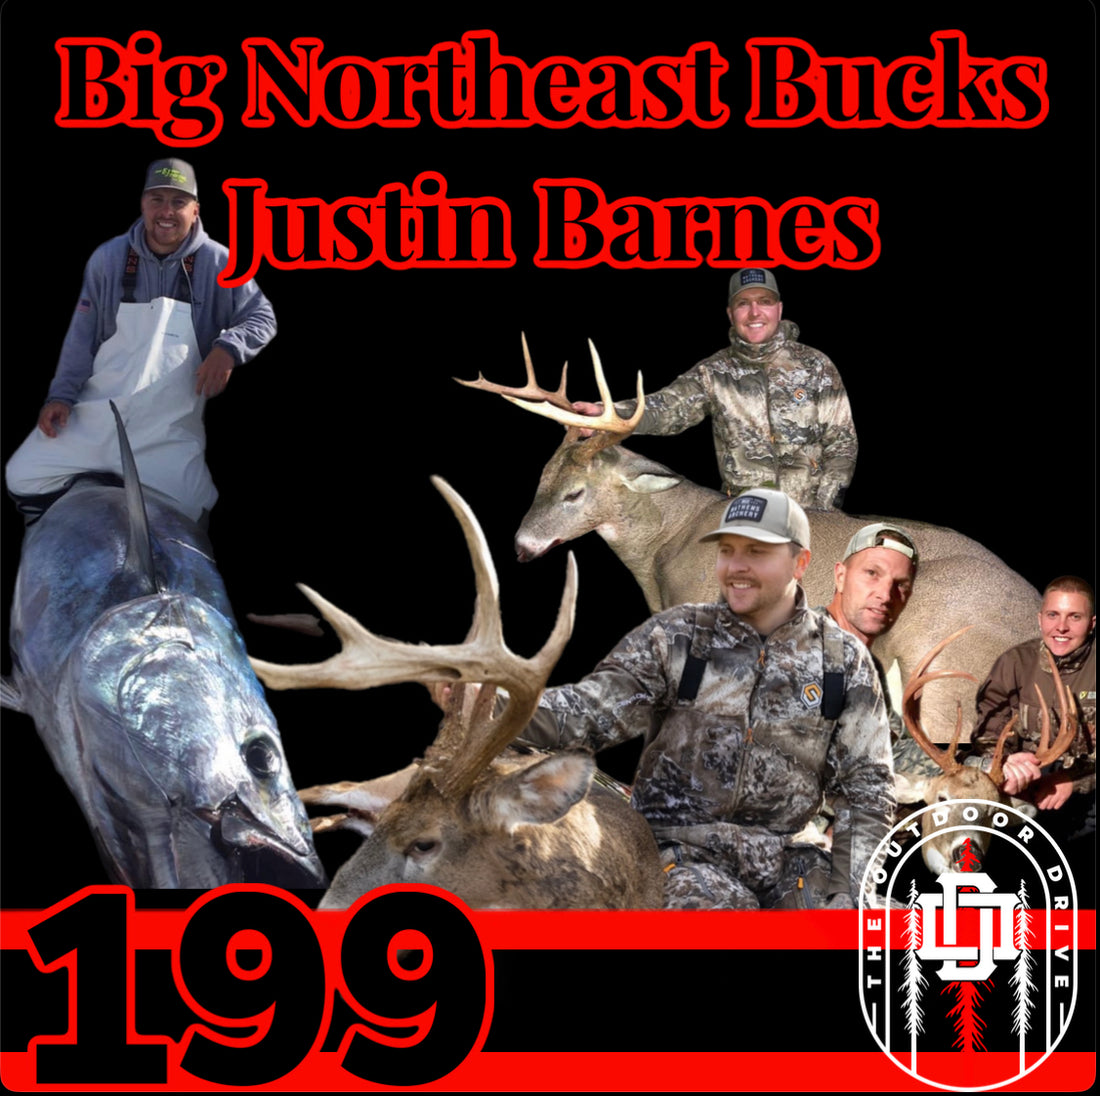 Chasing Big Bucks in Northeast